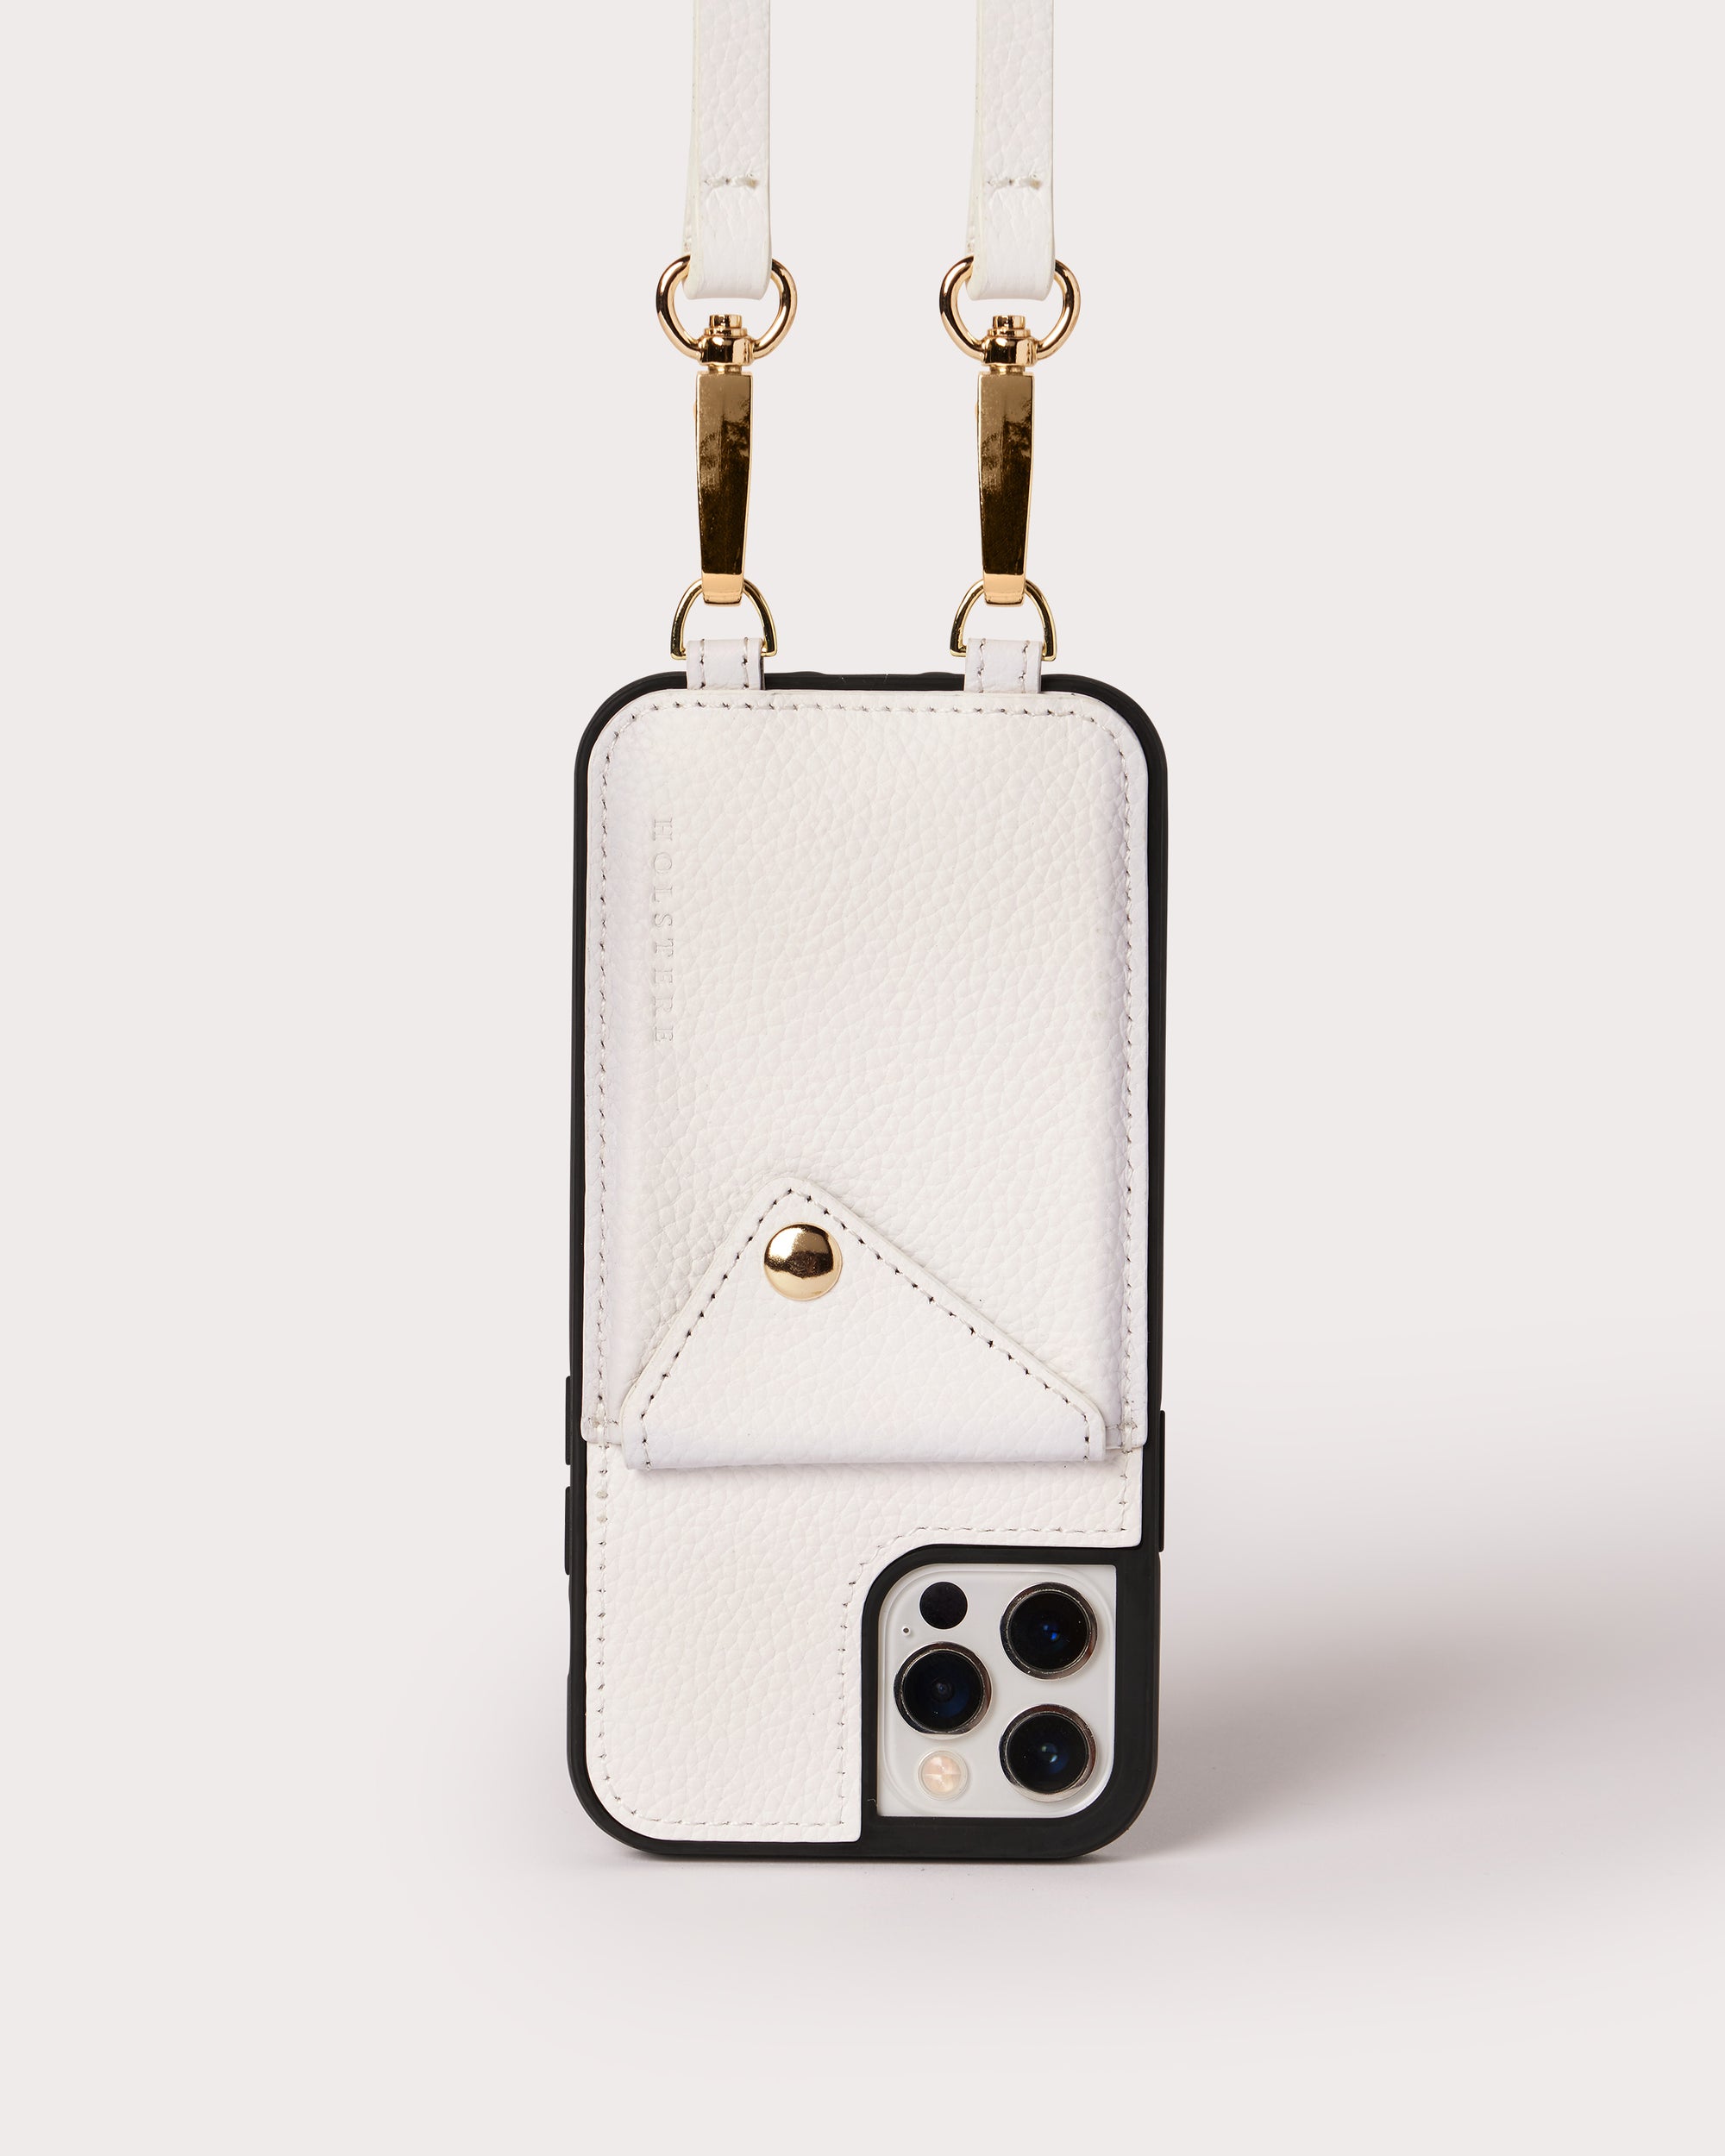 Crossbody iPhone Case - Royal (Gold Chain)